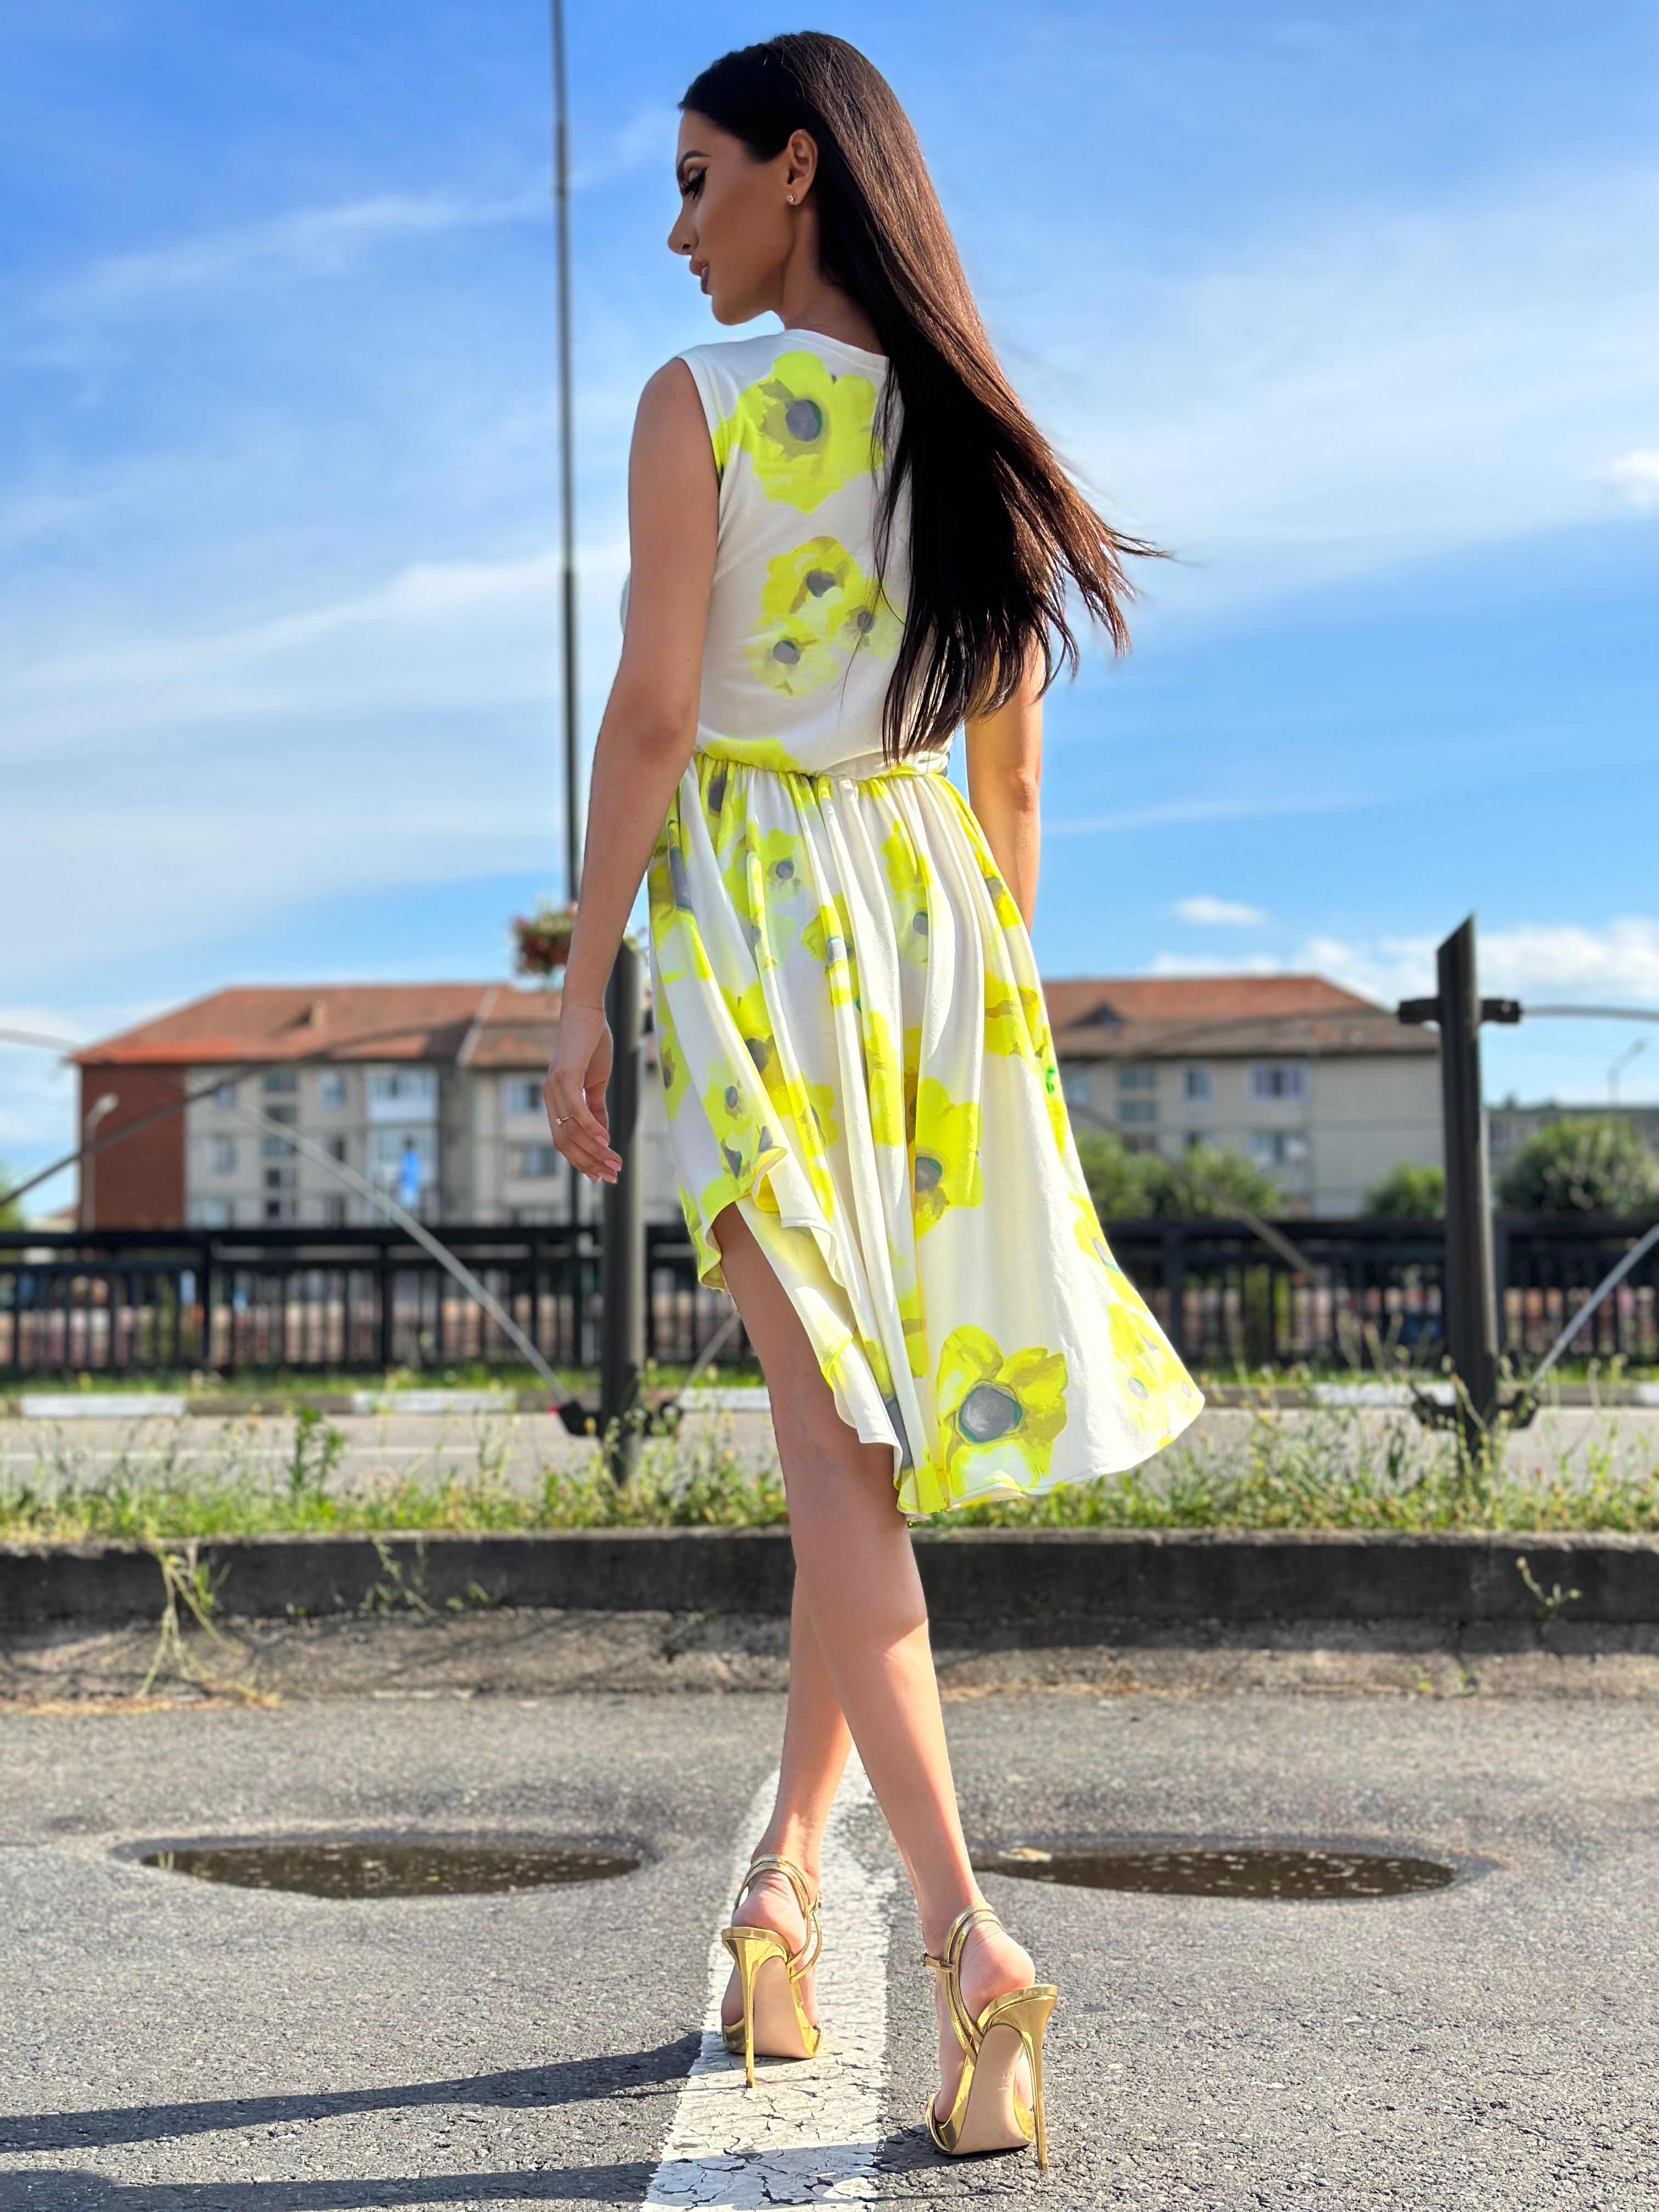 Yellow Flower Dress